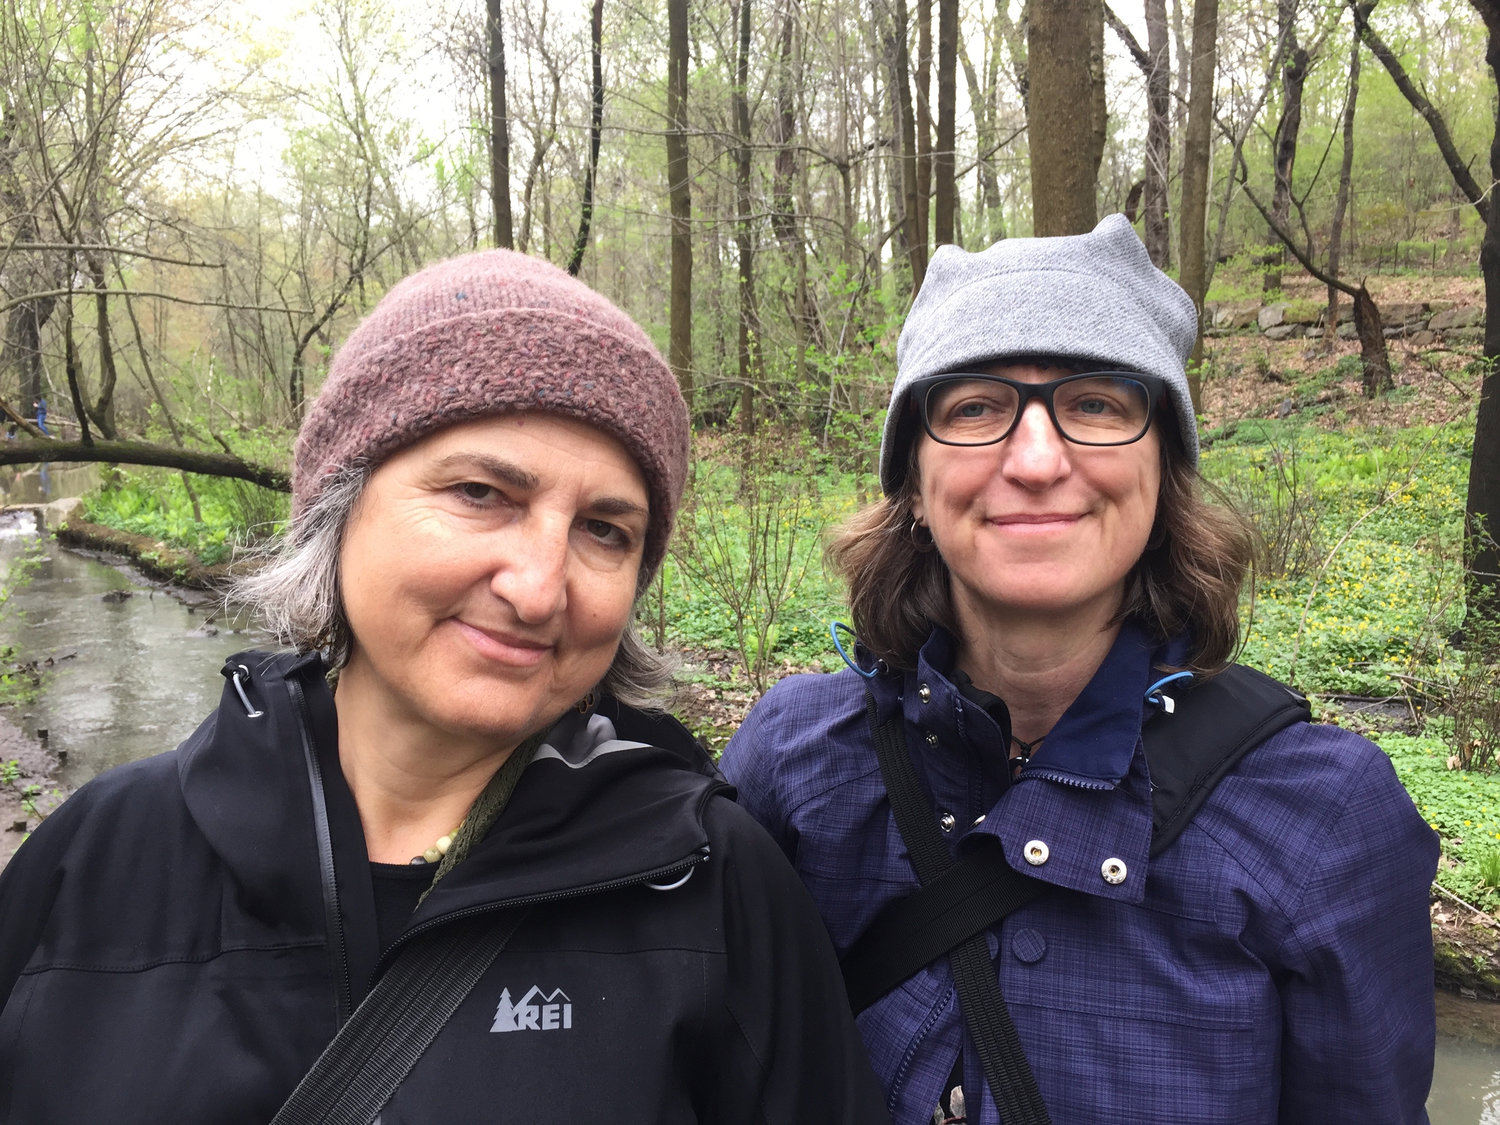 Julie O’Baoighill &
Giuliana Ciabo:
Longtime residents of Longfellow, 
together 31 years